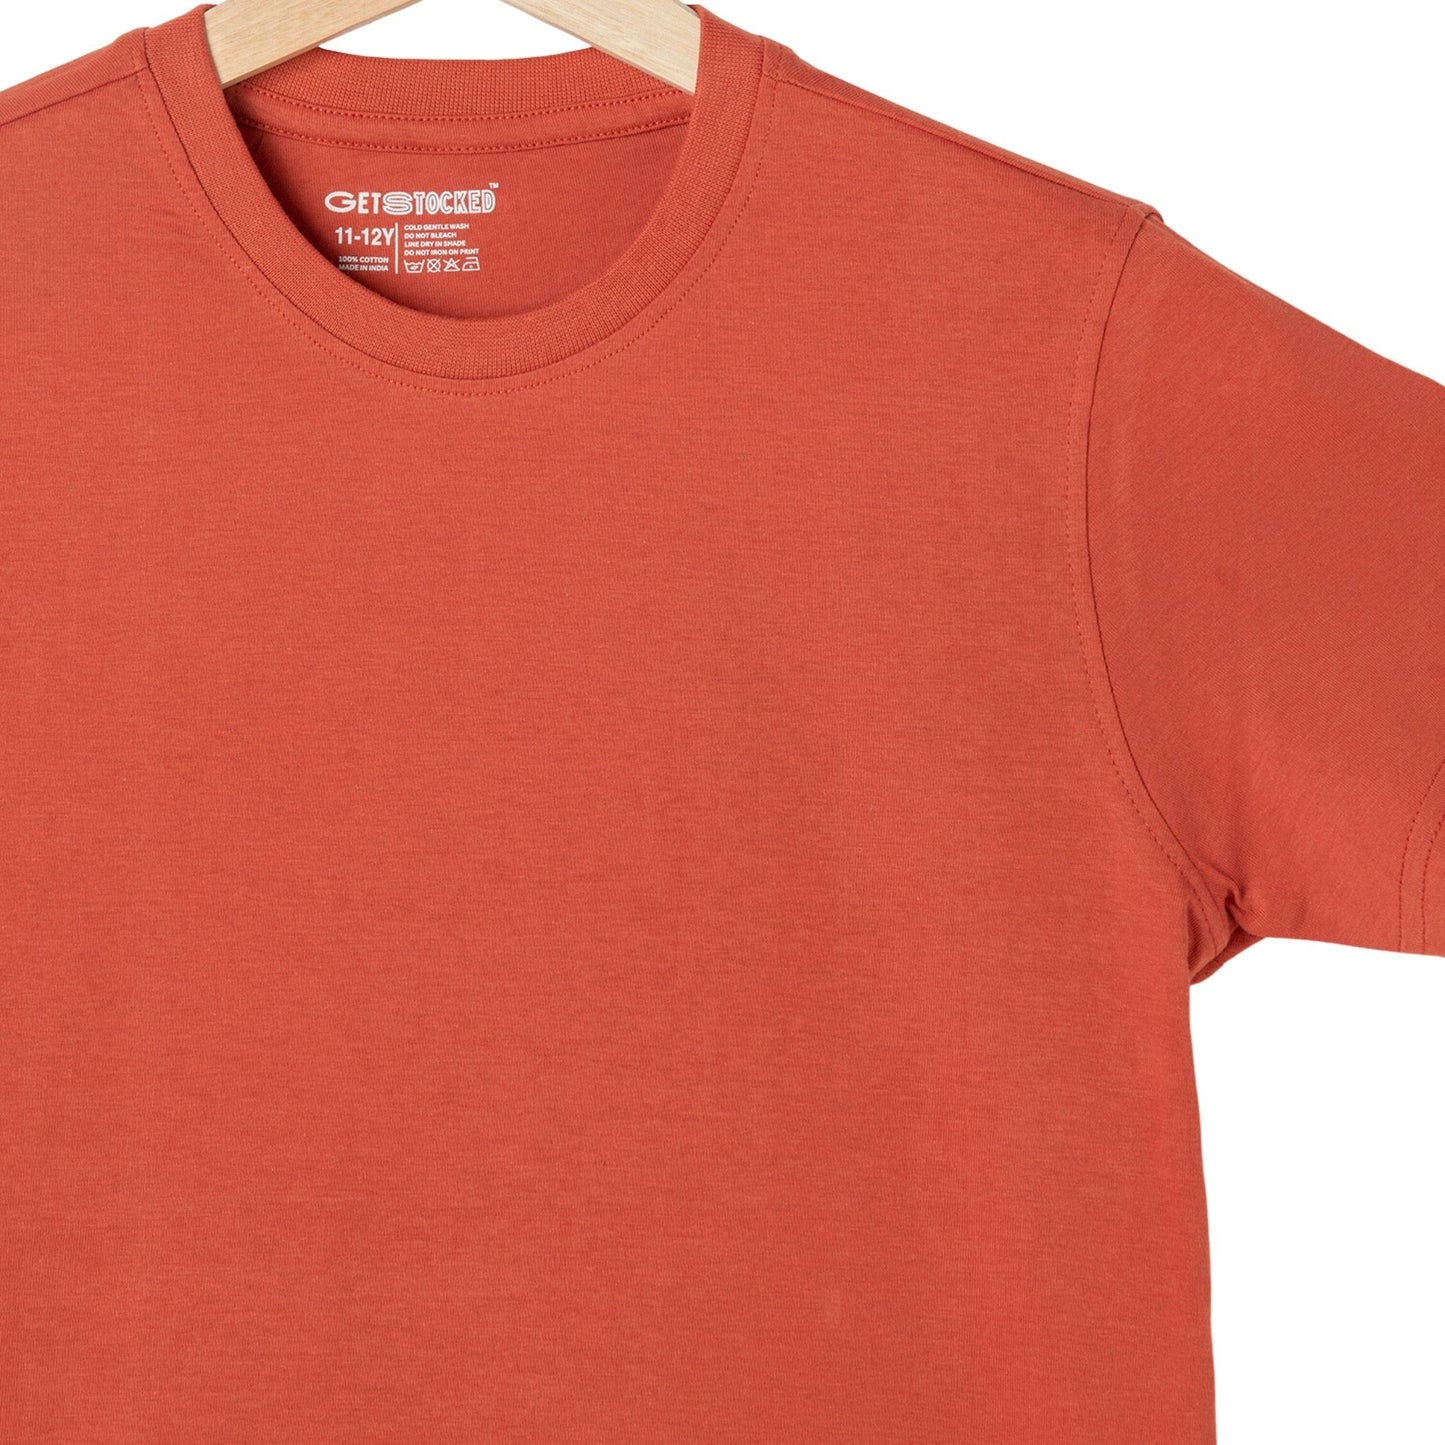 Solid Boys Cotton T-Shirt (Rust Orange)